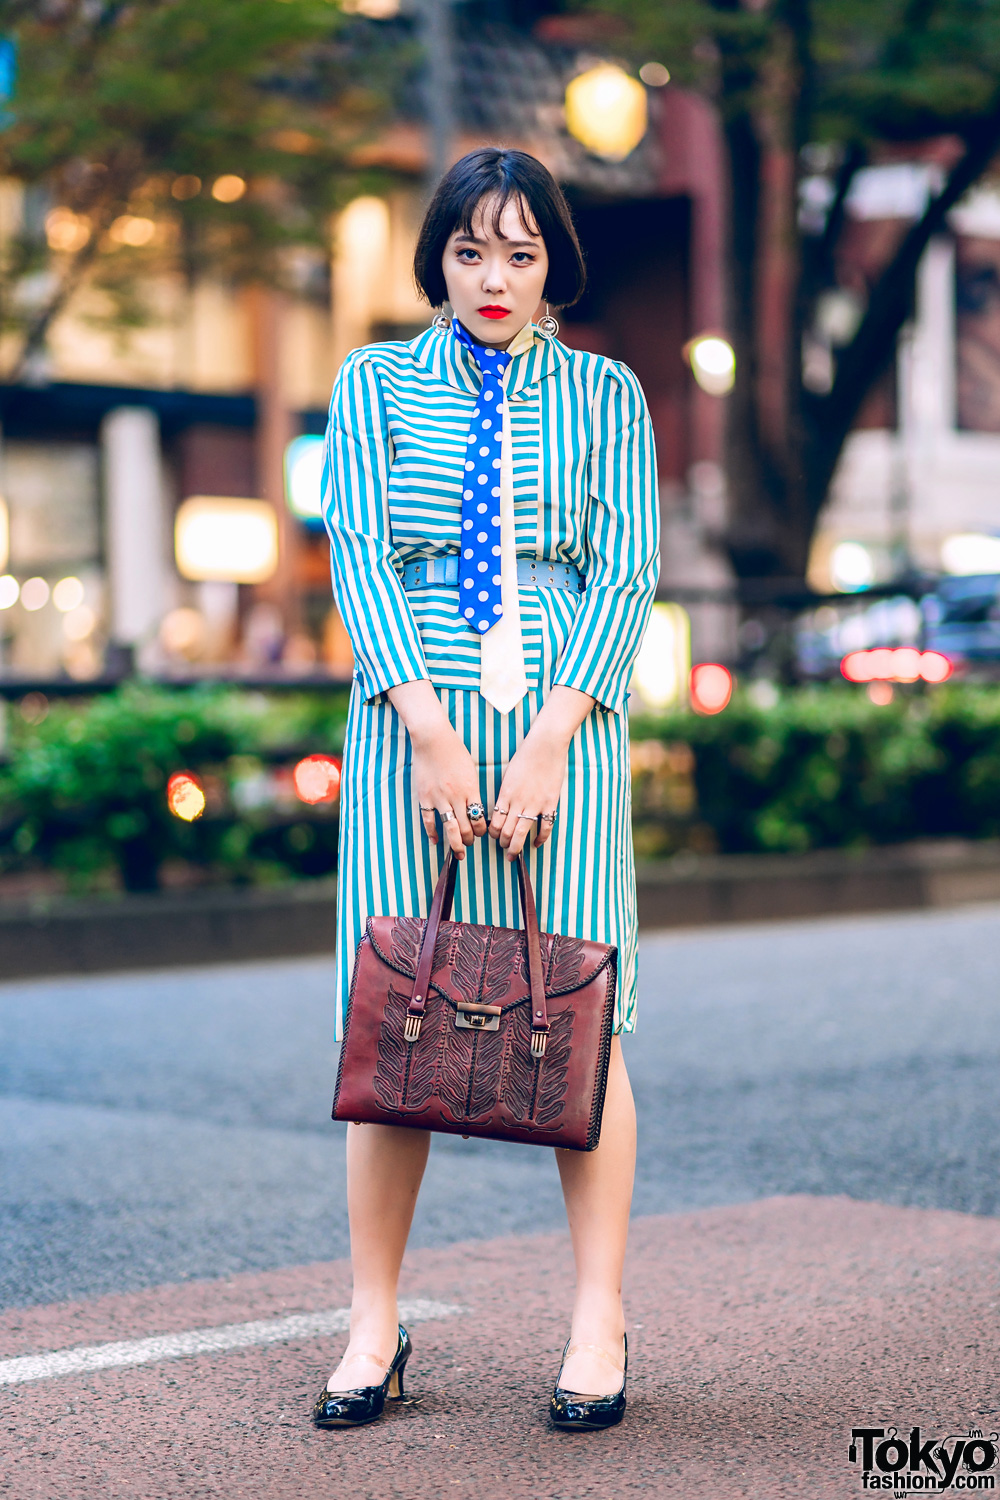 Patterned Harajuku Streetwear Style w/ Double Neckties, Vintage Striped Dress, Satchel Handbag & Patent Pumps